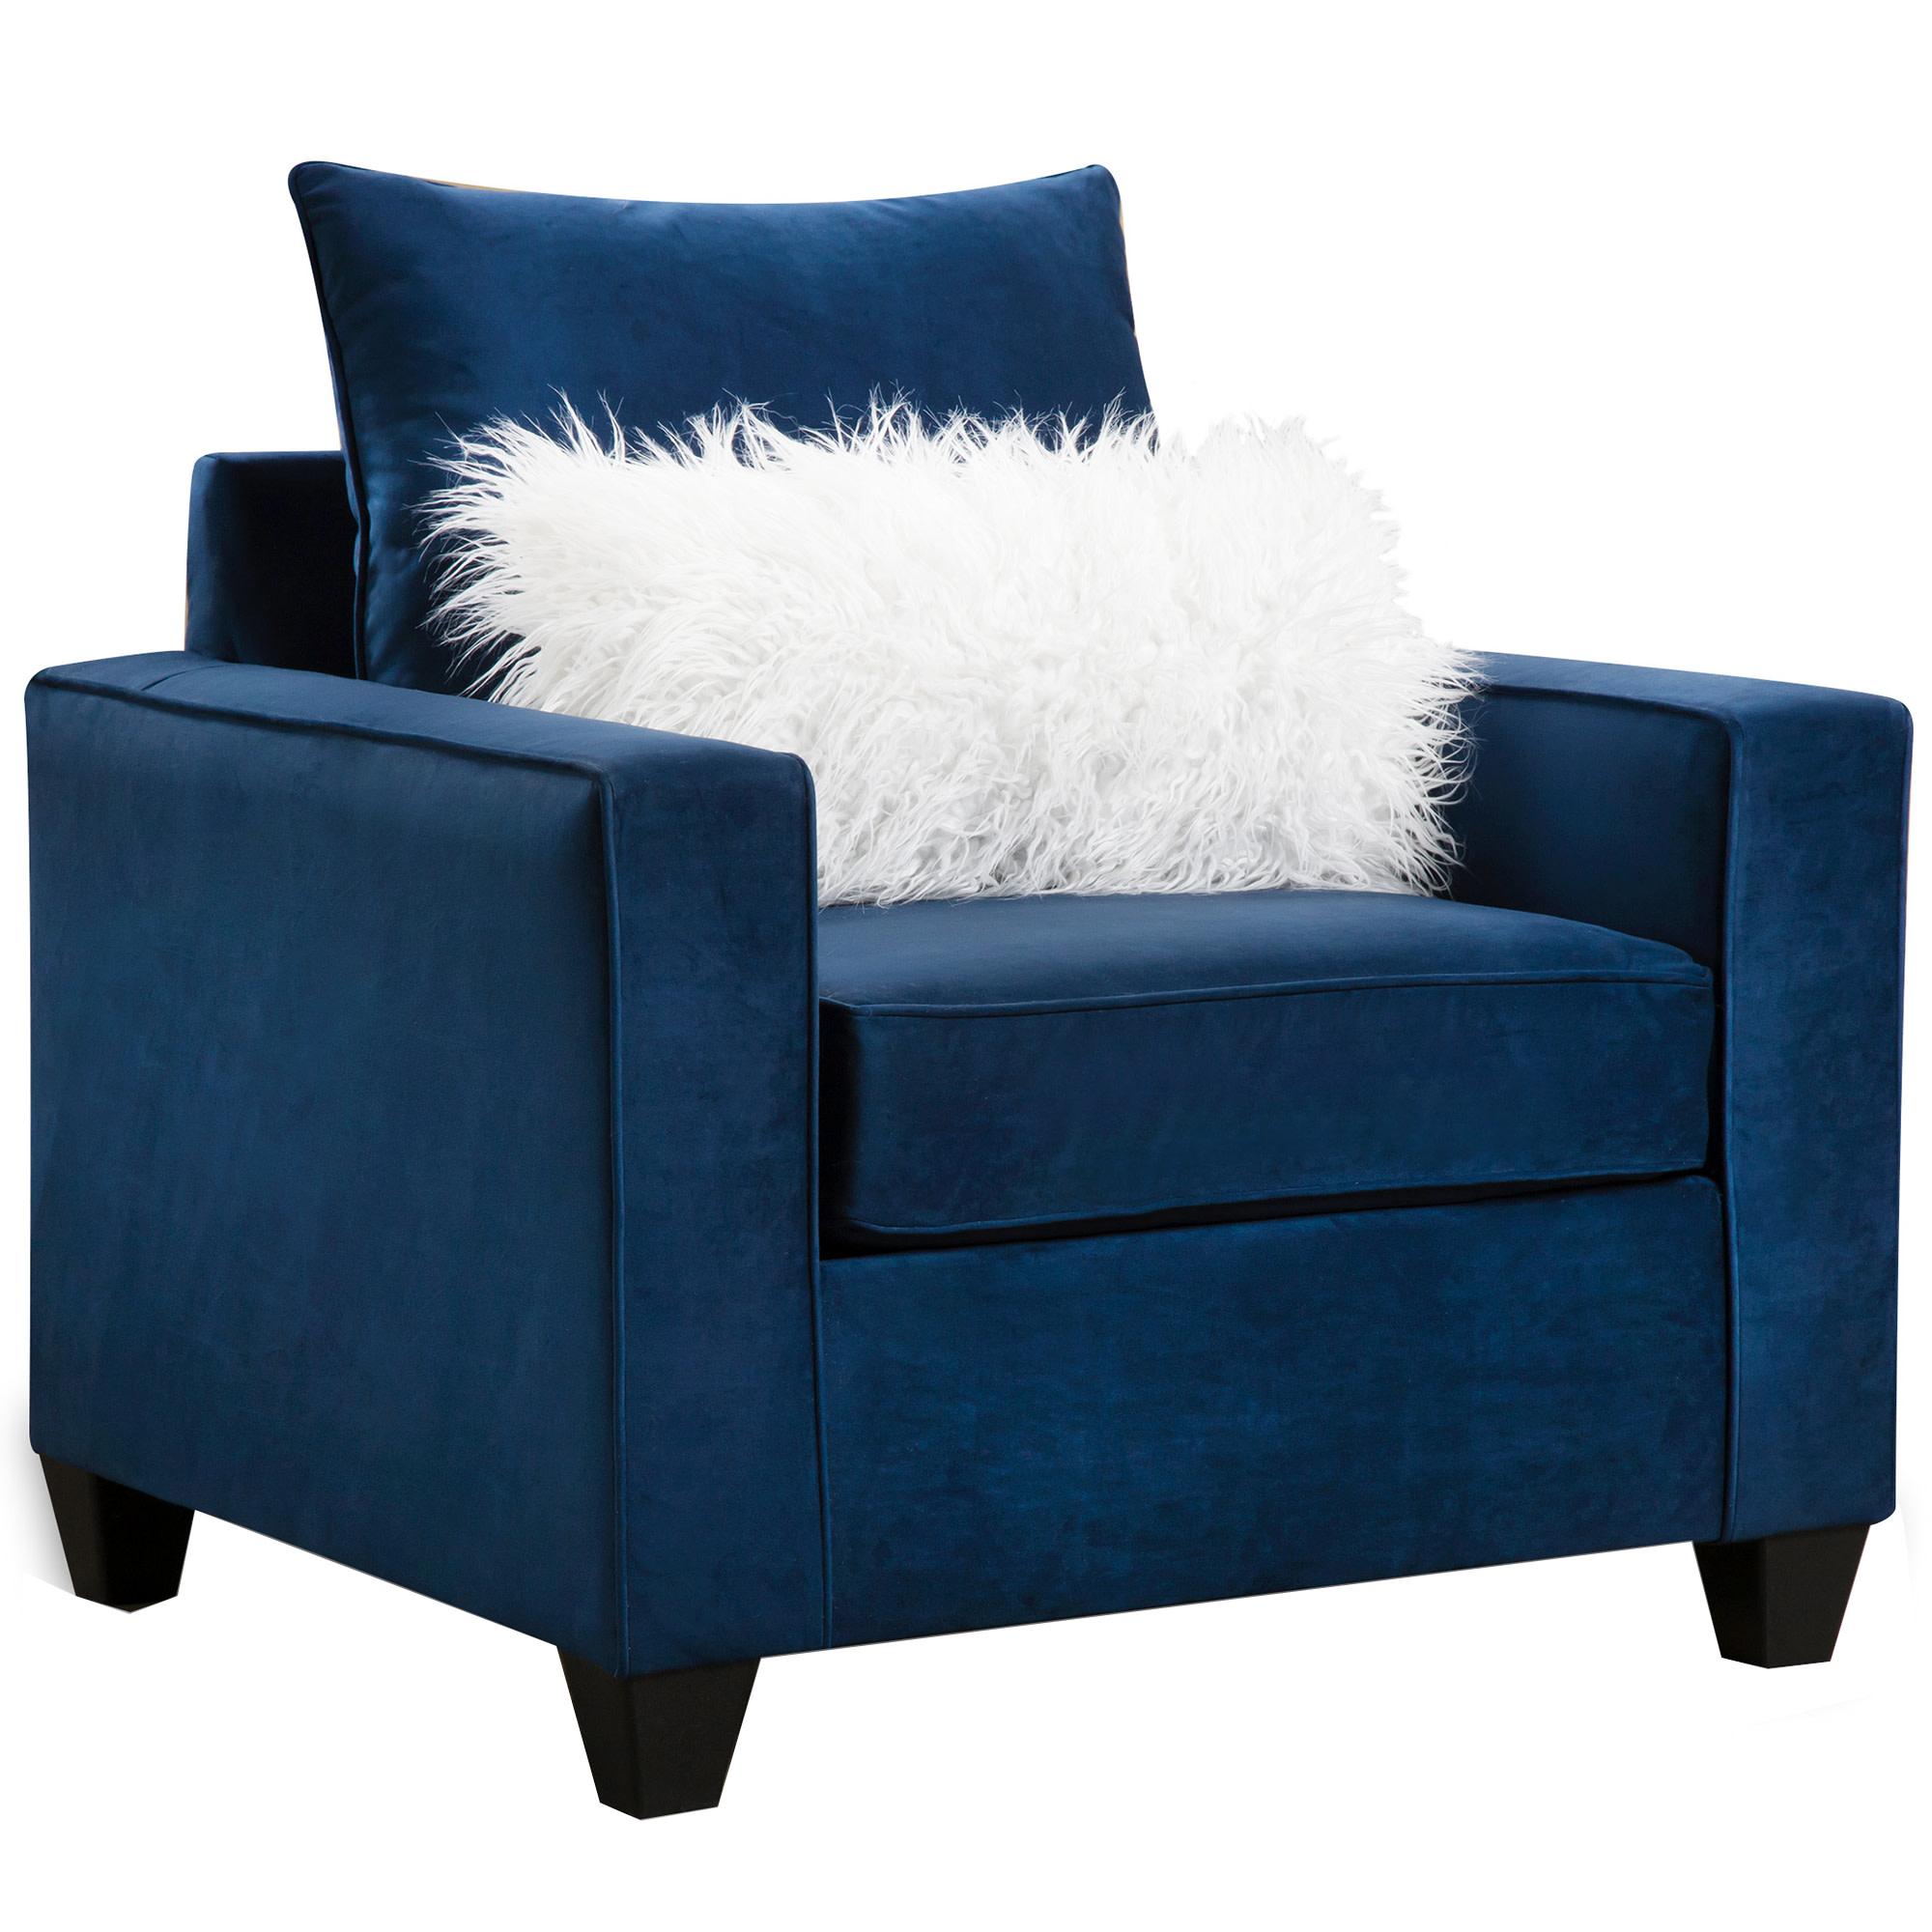 Indigo Blue Accent Chair